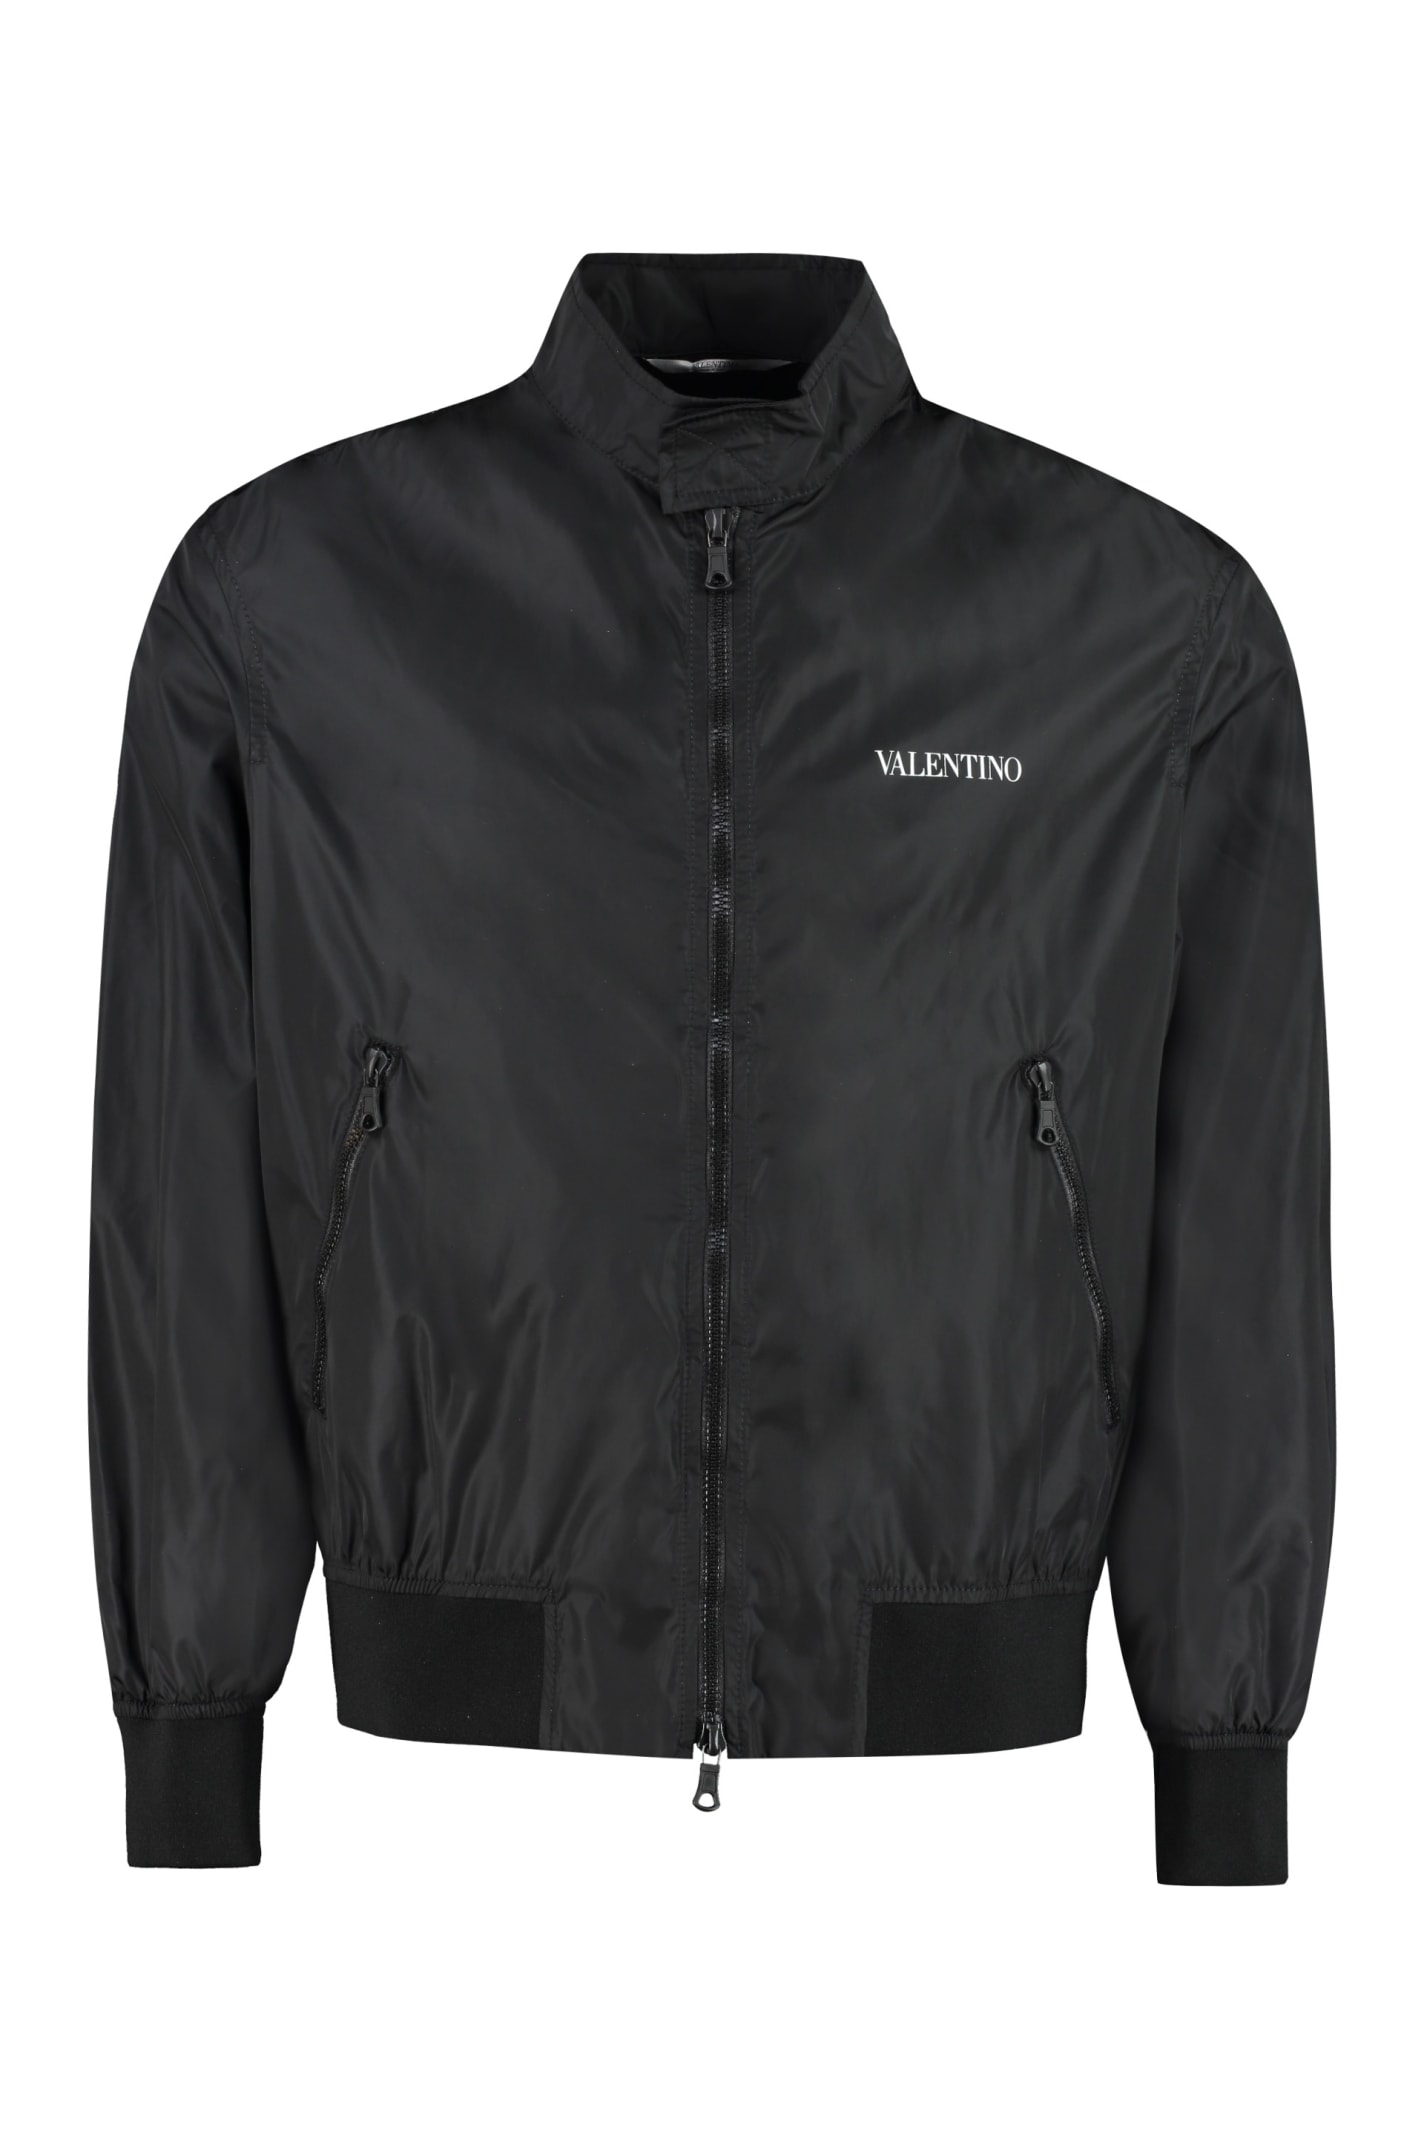 Valentino Nylon Windbreaker-jacket